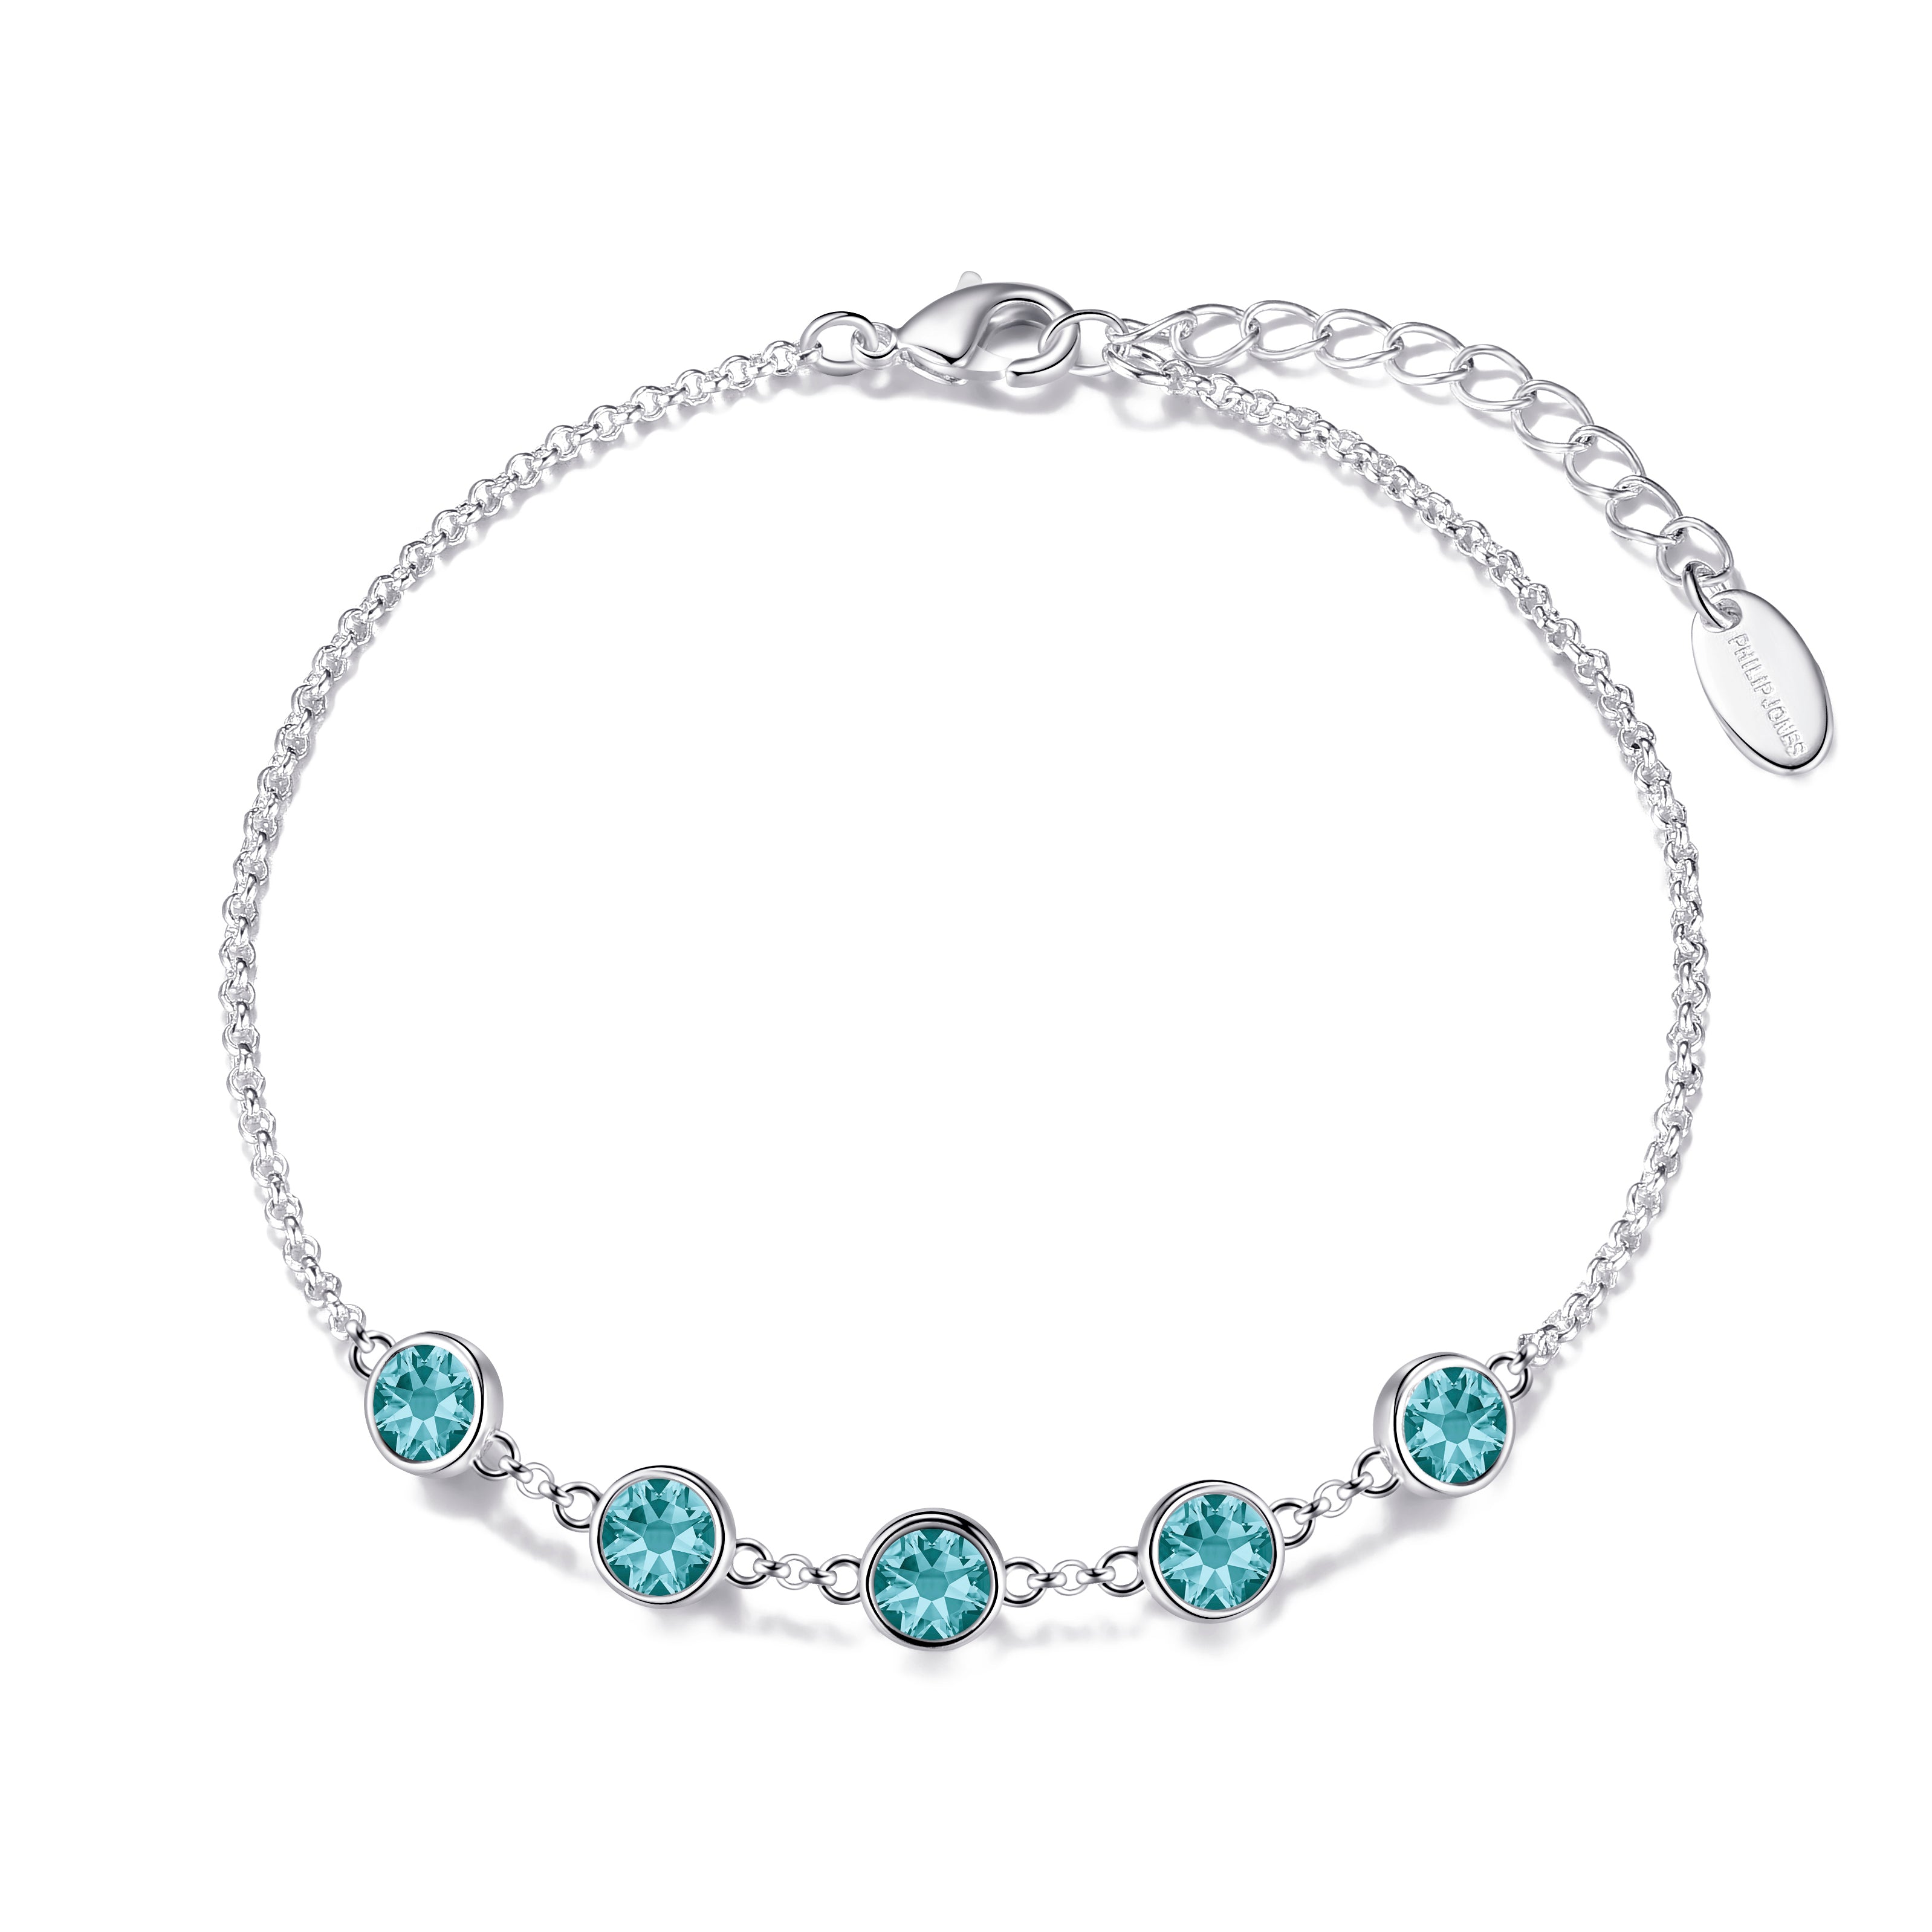 Blue Crystal Chain Bracelet Created with Zircondia® Crystals by Philip Jones Jewellery